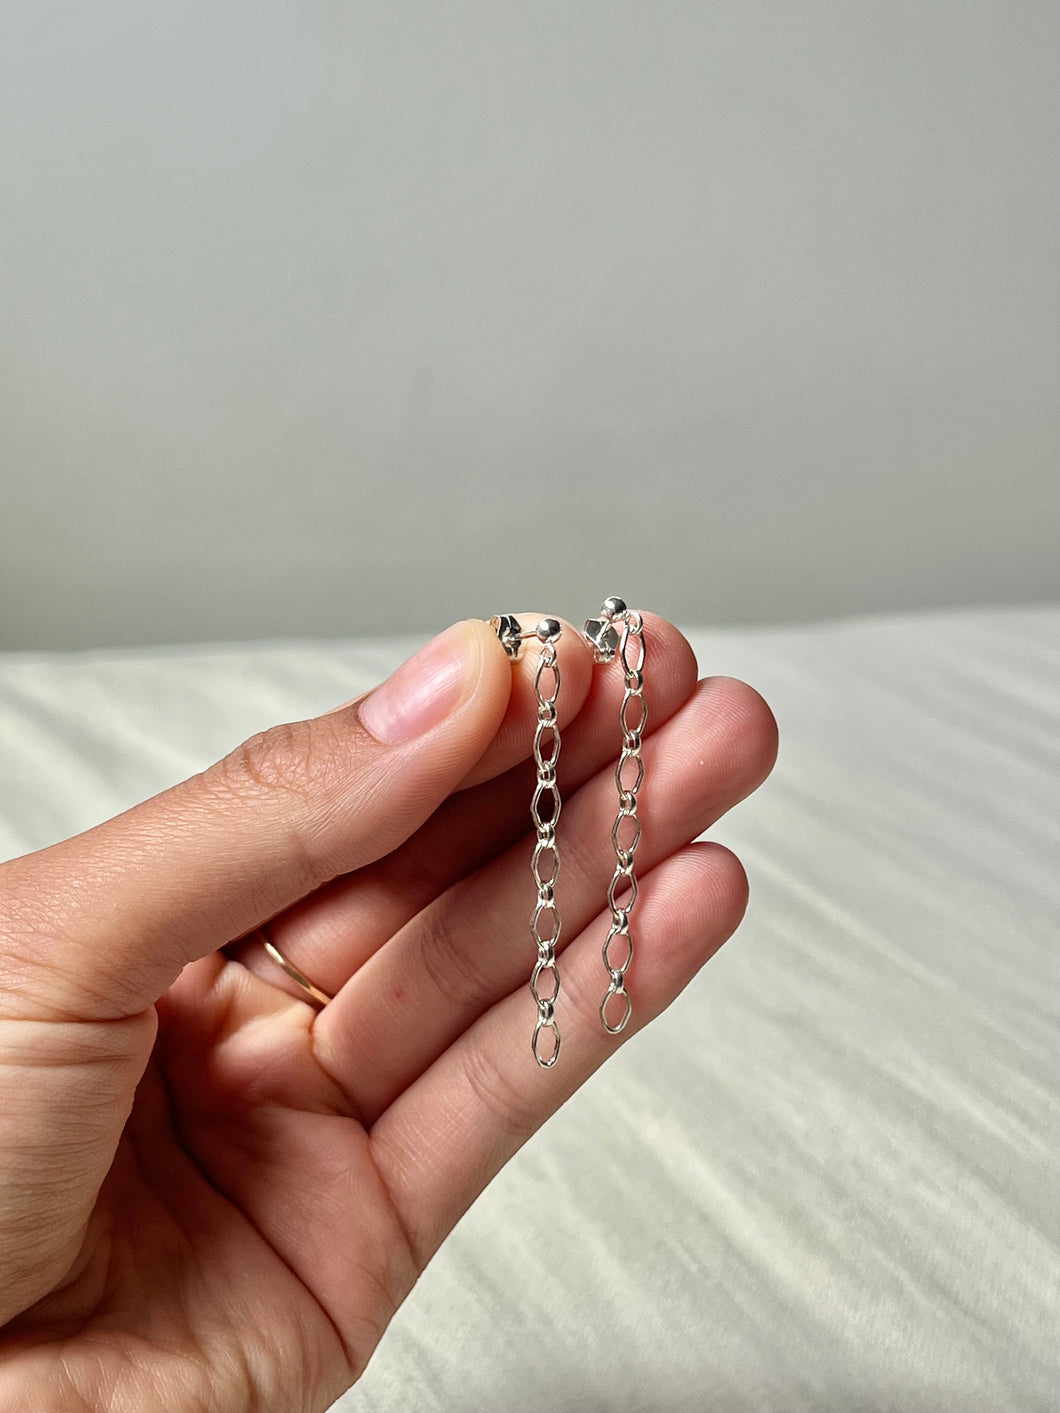 Chain stud earrings- ready to ship